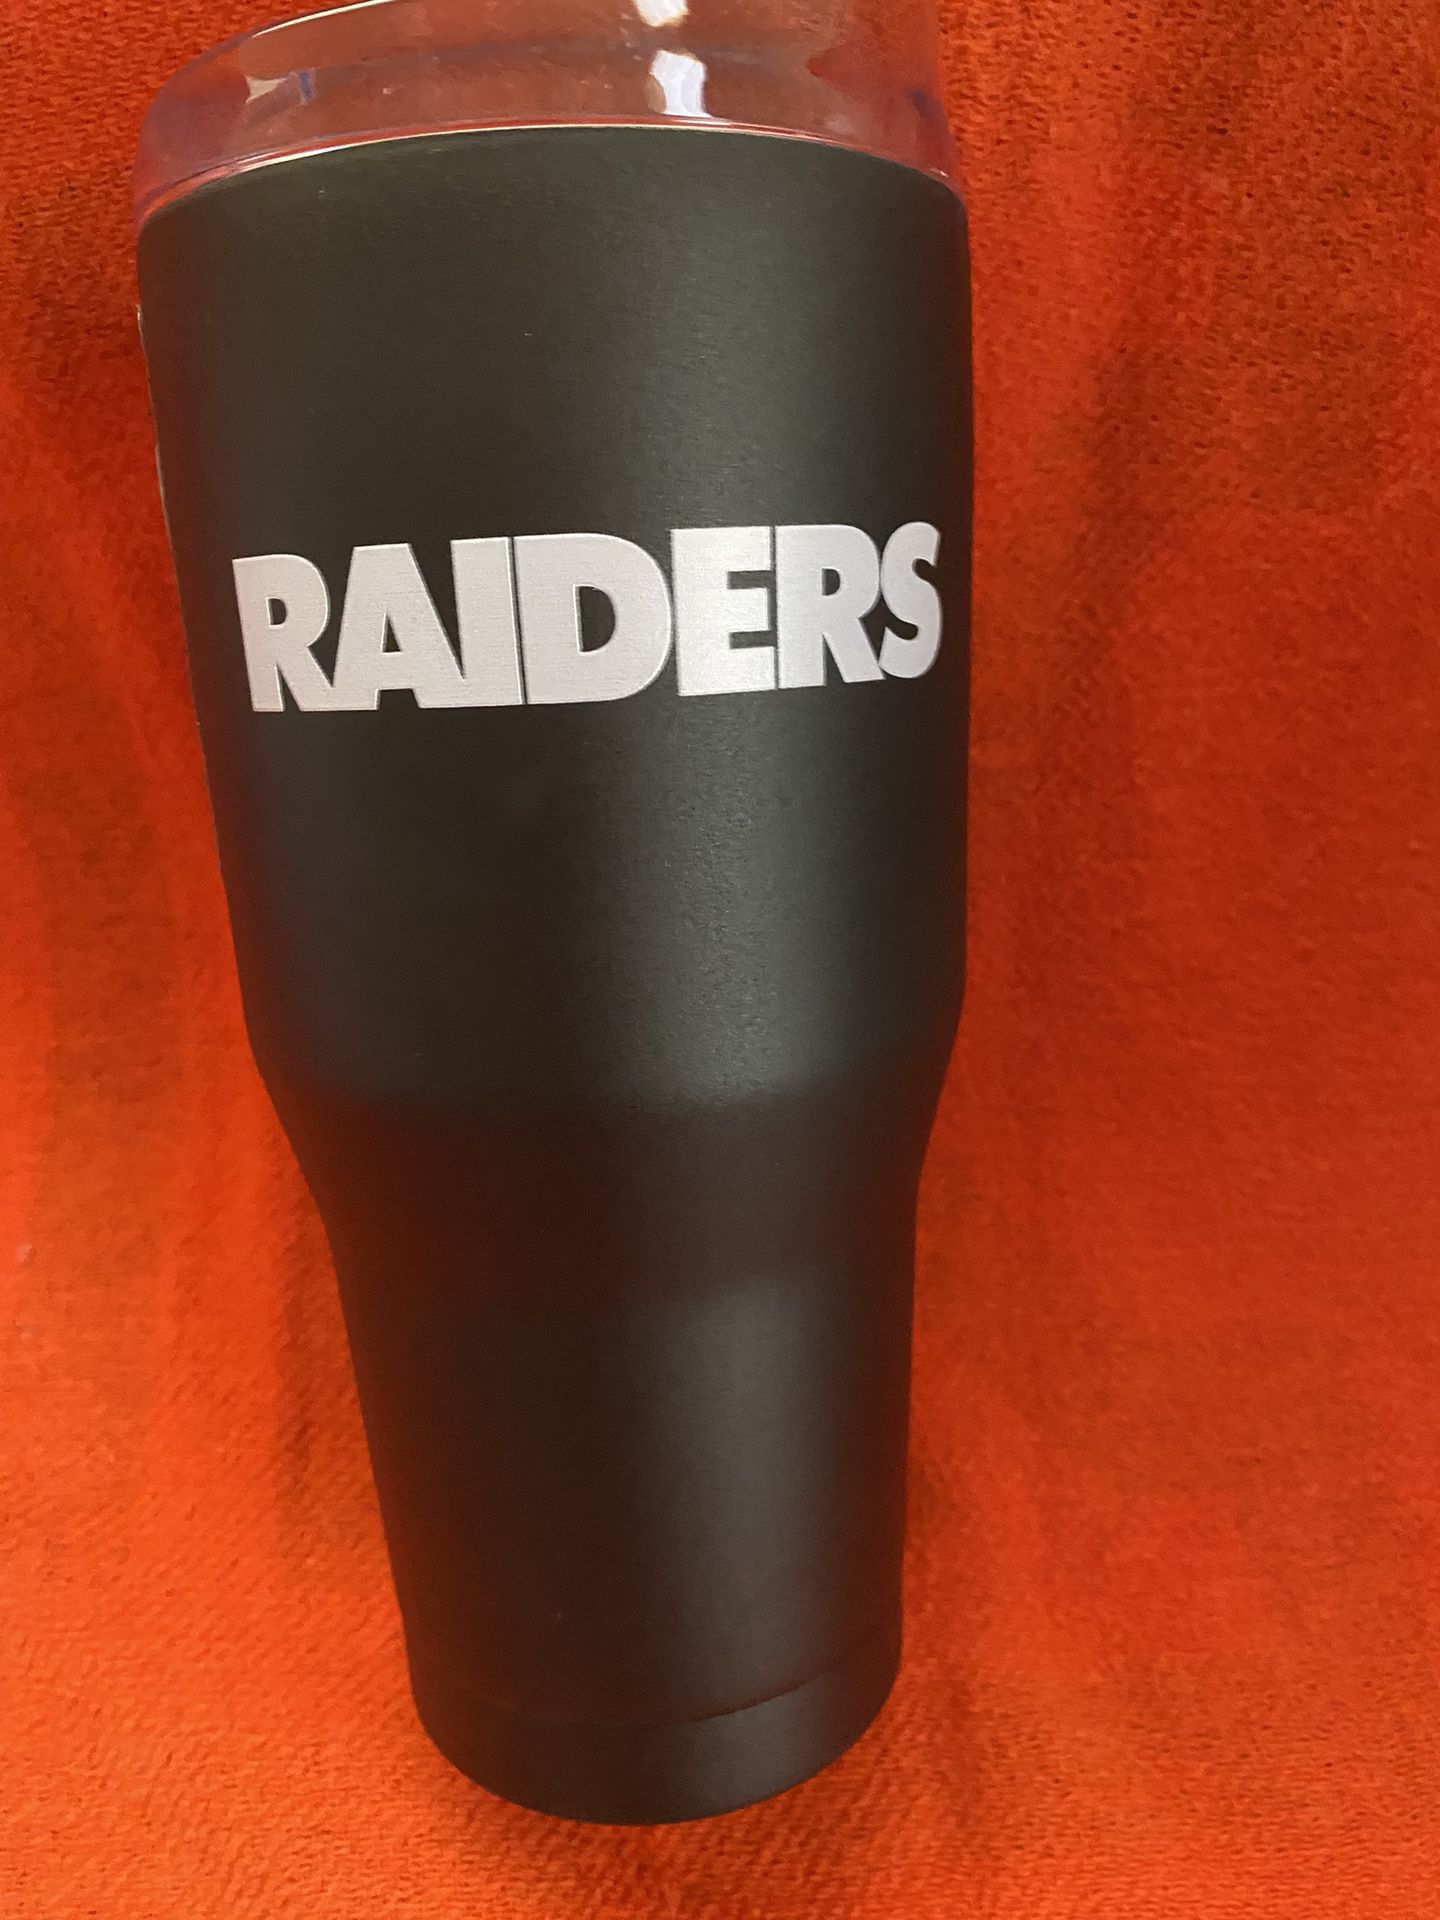 Raiders Cup